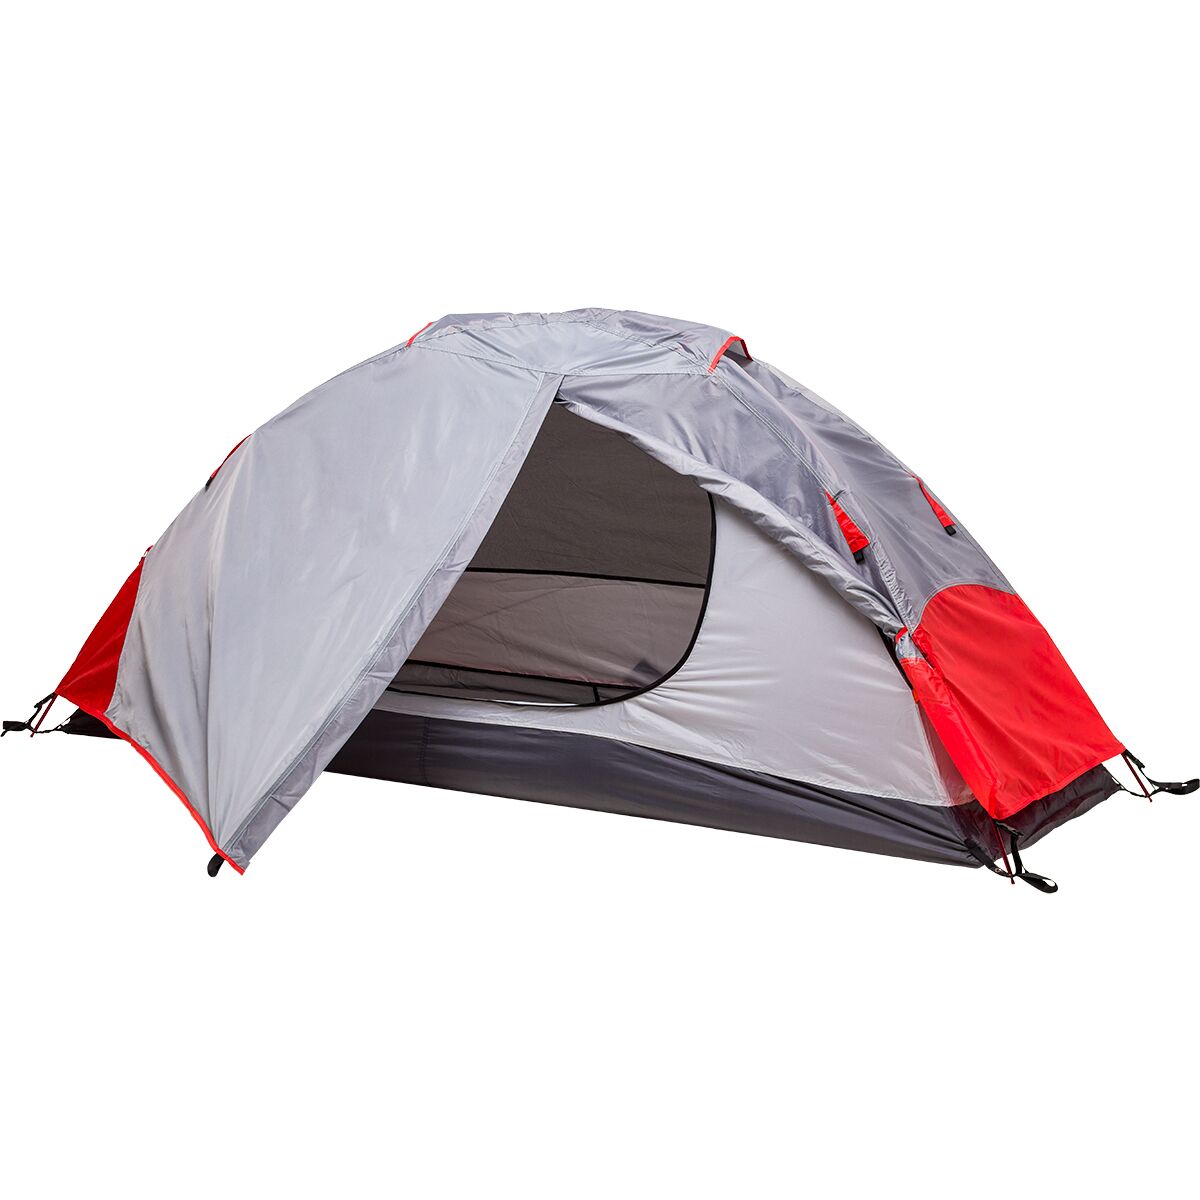 ALPS Mountaineering Koda 1 Tent: 1-Person 3-Season